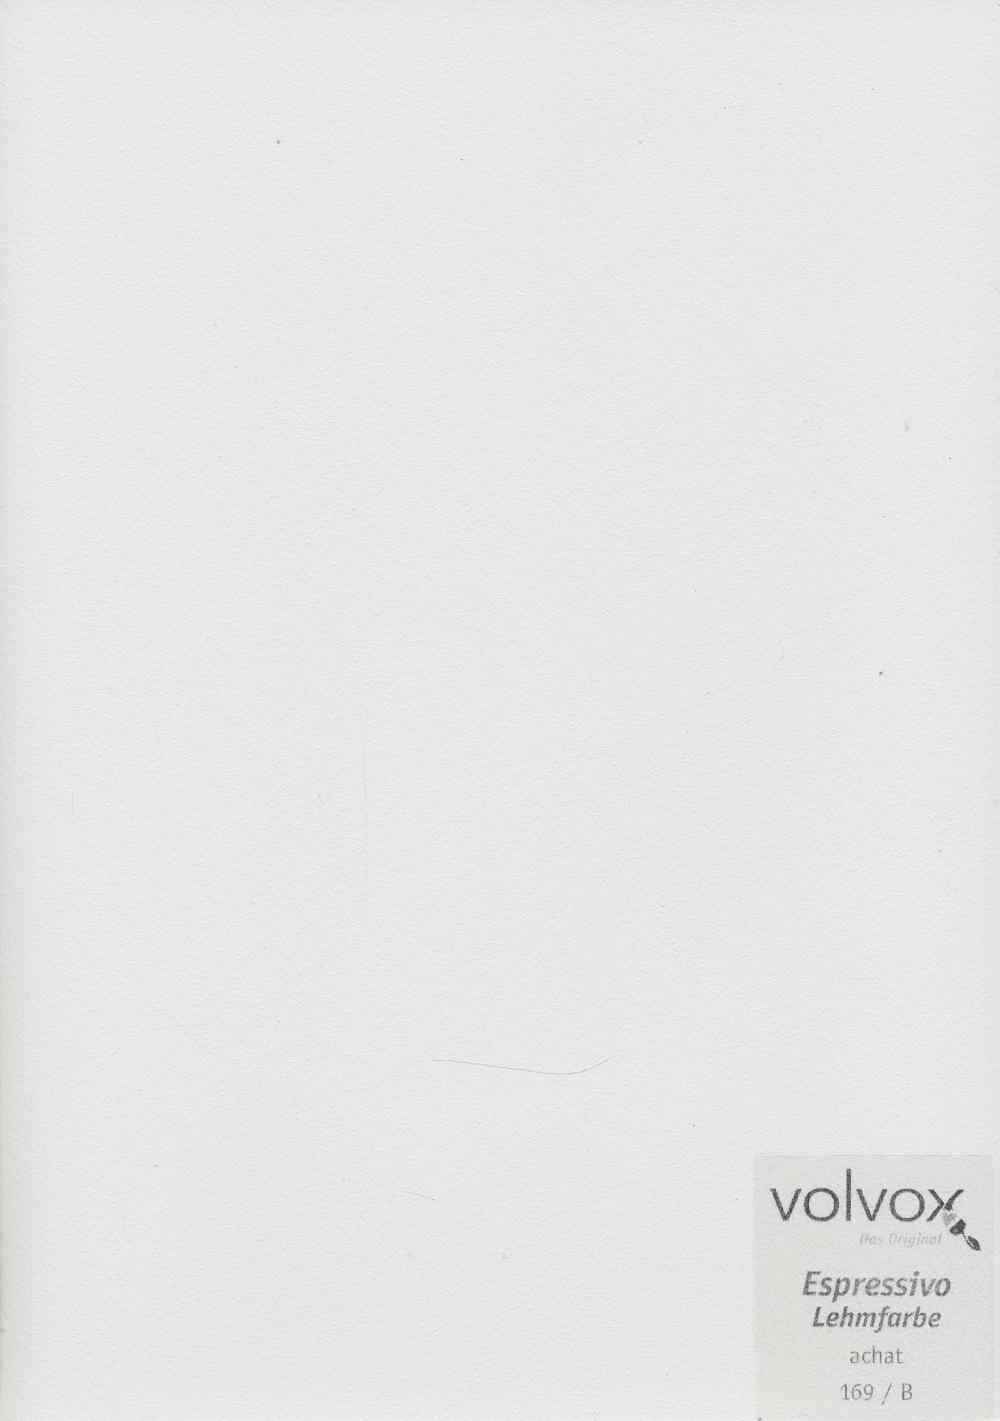 Volvox Espressivo Lehmfarbe 169 achat · 0,9ltr.